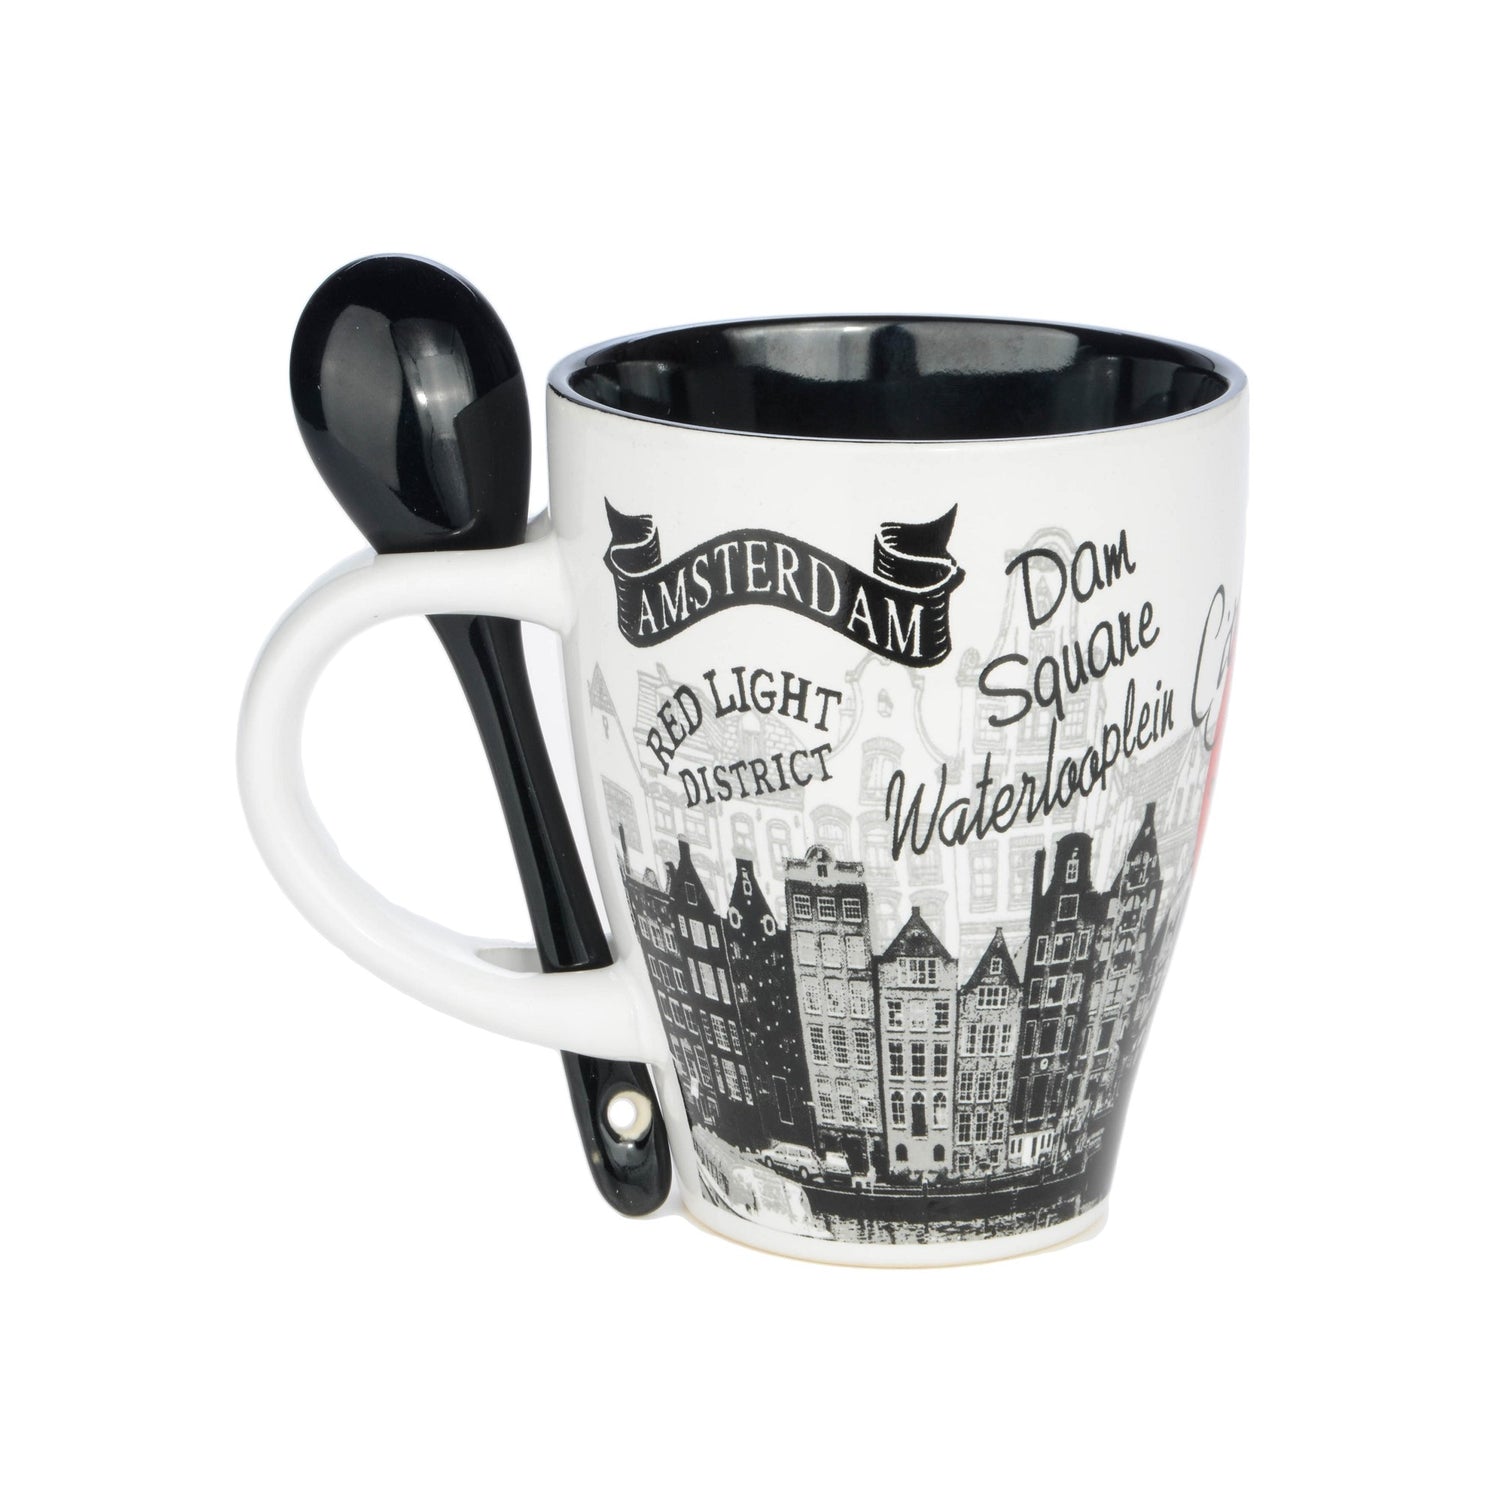 Mug with spoon - Black and white - Amsterdam